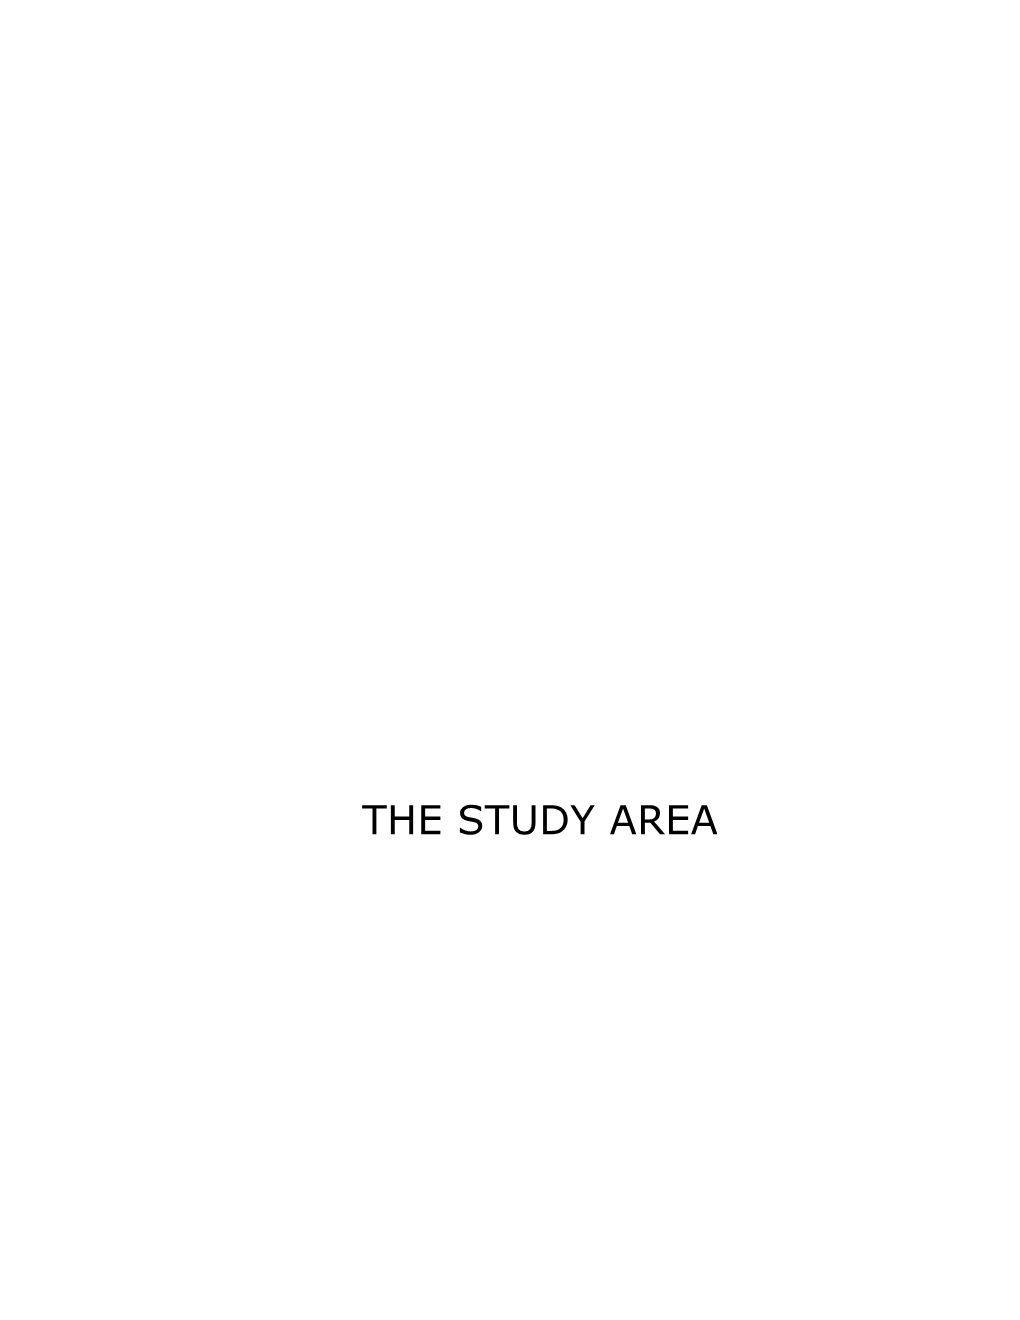 The Study Area